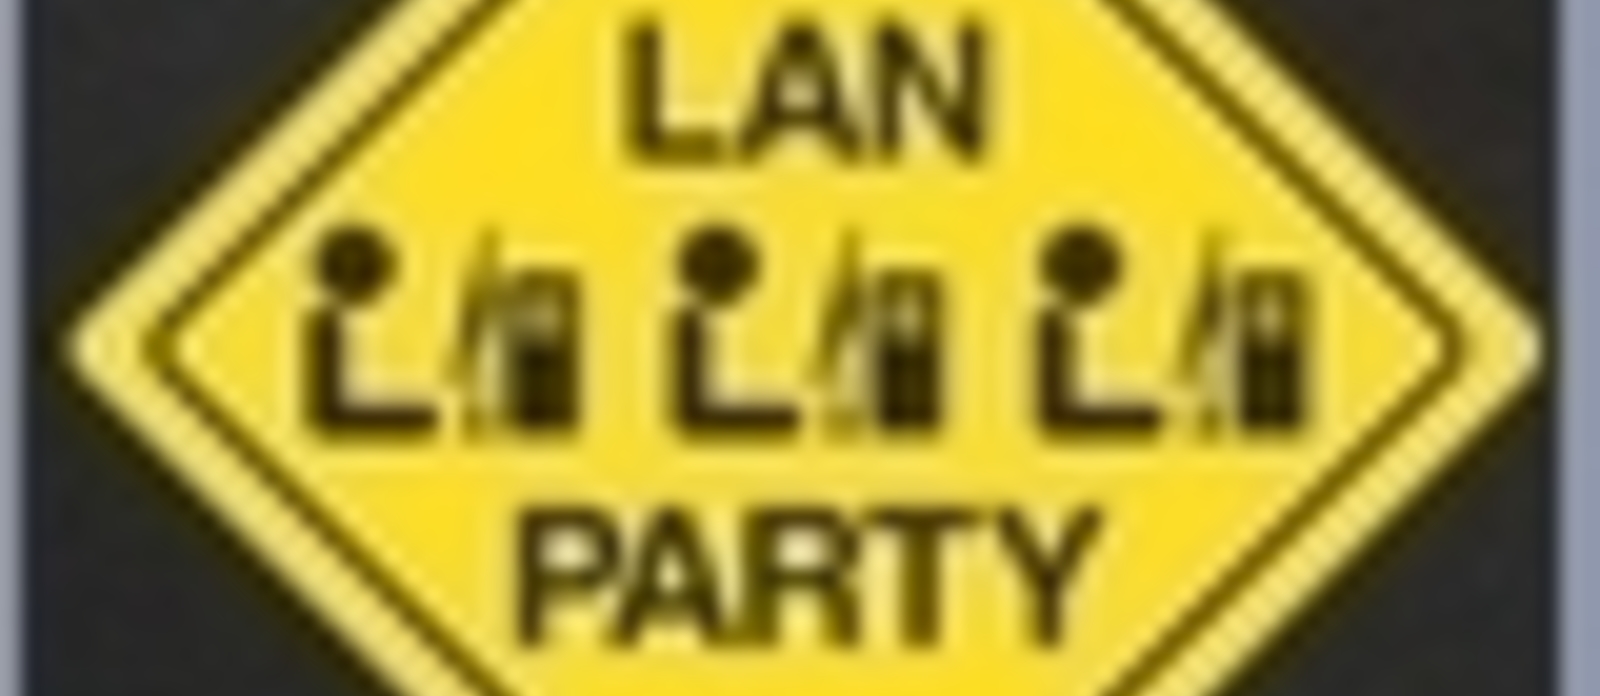 LAN party: Poslednji jezdeci apokalipse, winter edition